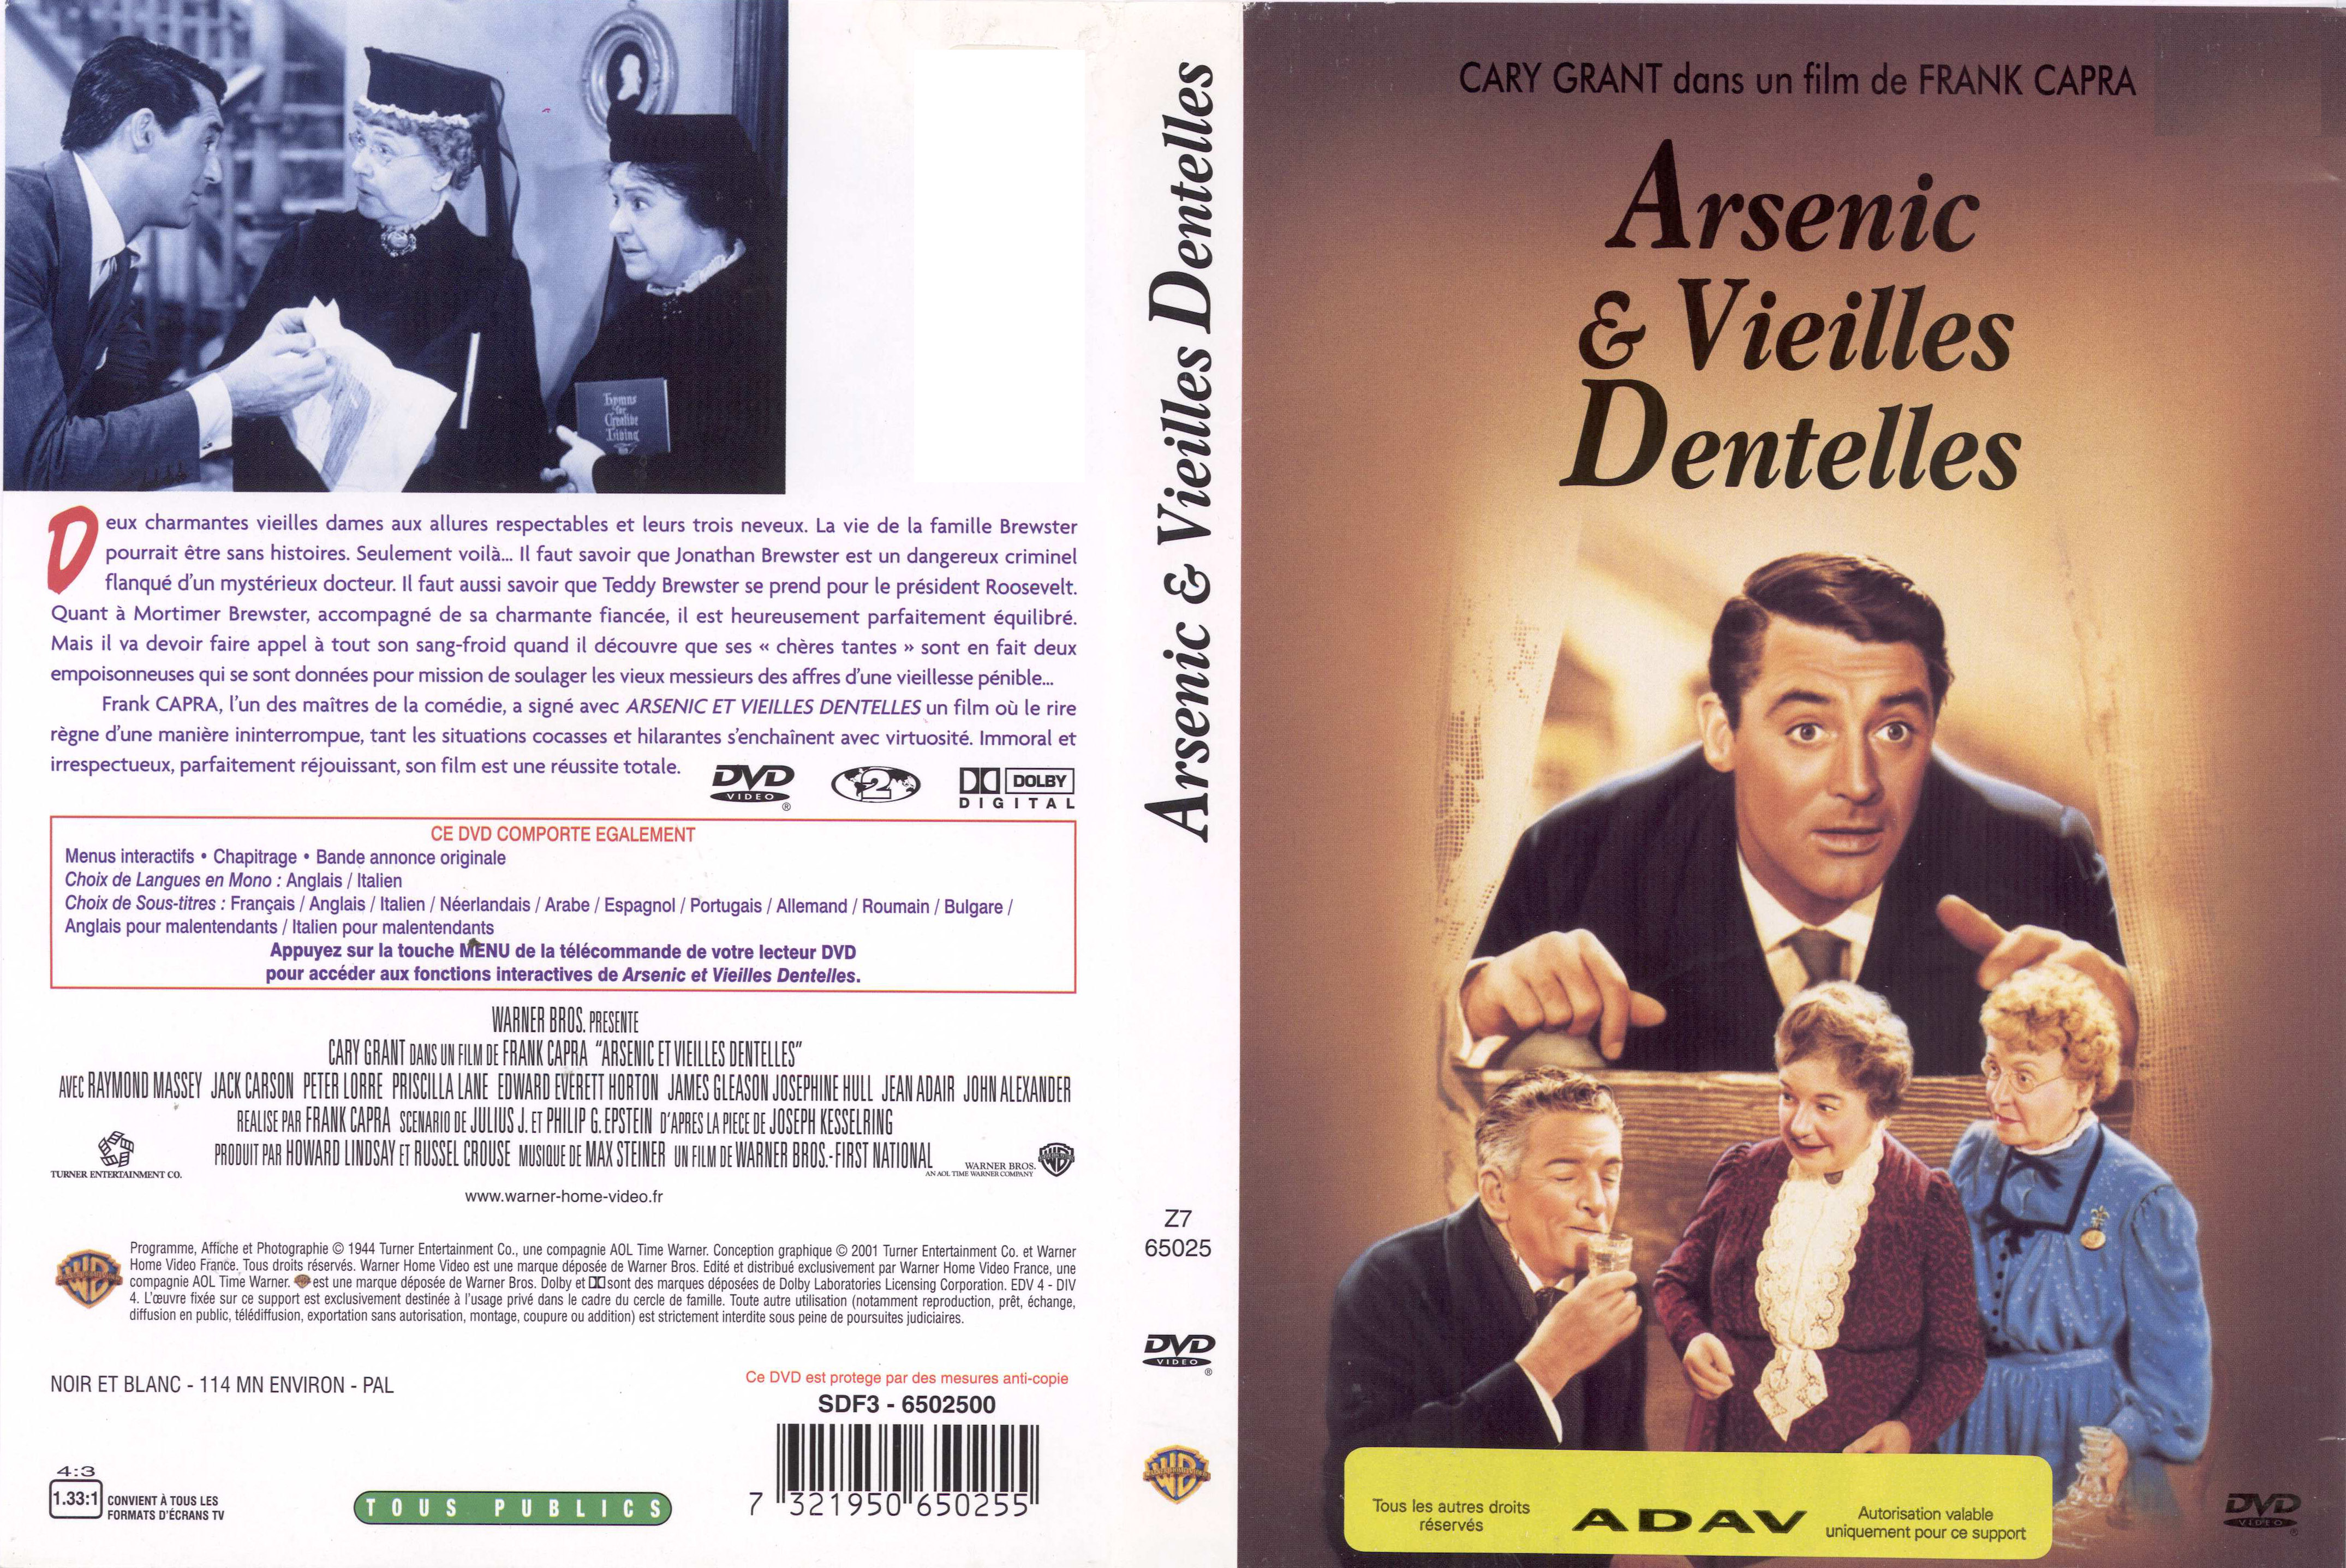 Jaquette DVD Arsenic et vieilles dentelles v2